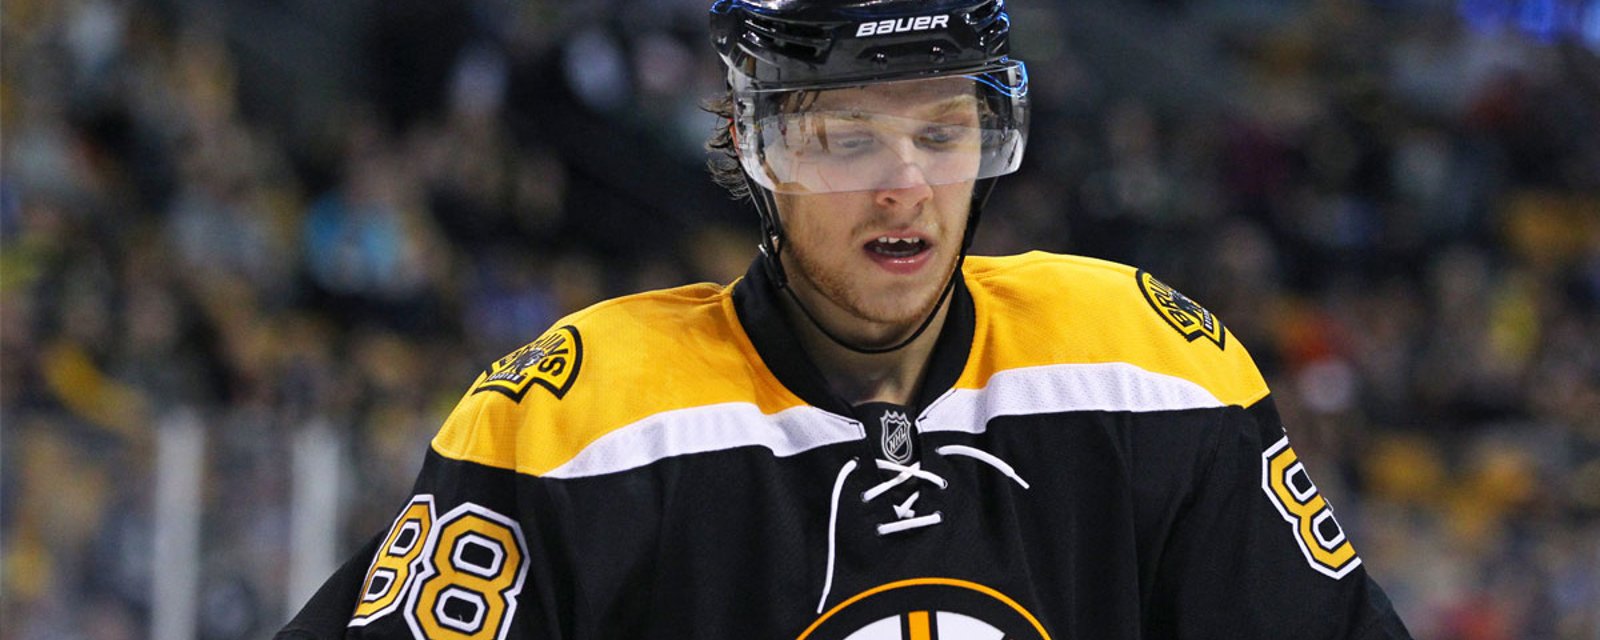 Rumor: Bruins’ owner Jacobs interfering in Pastrnak negotiations?